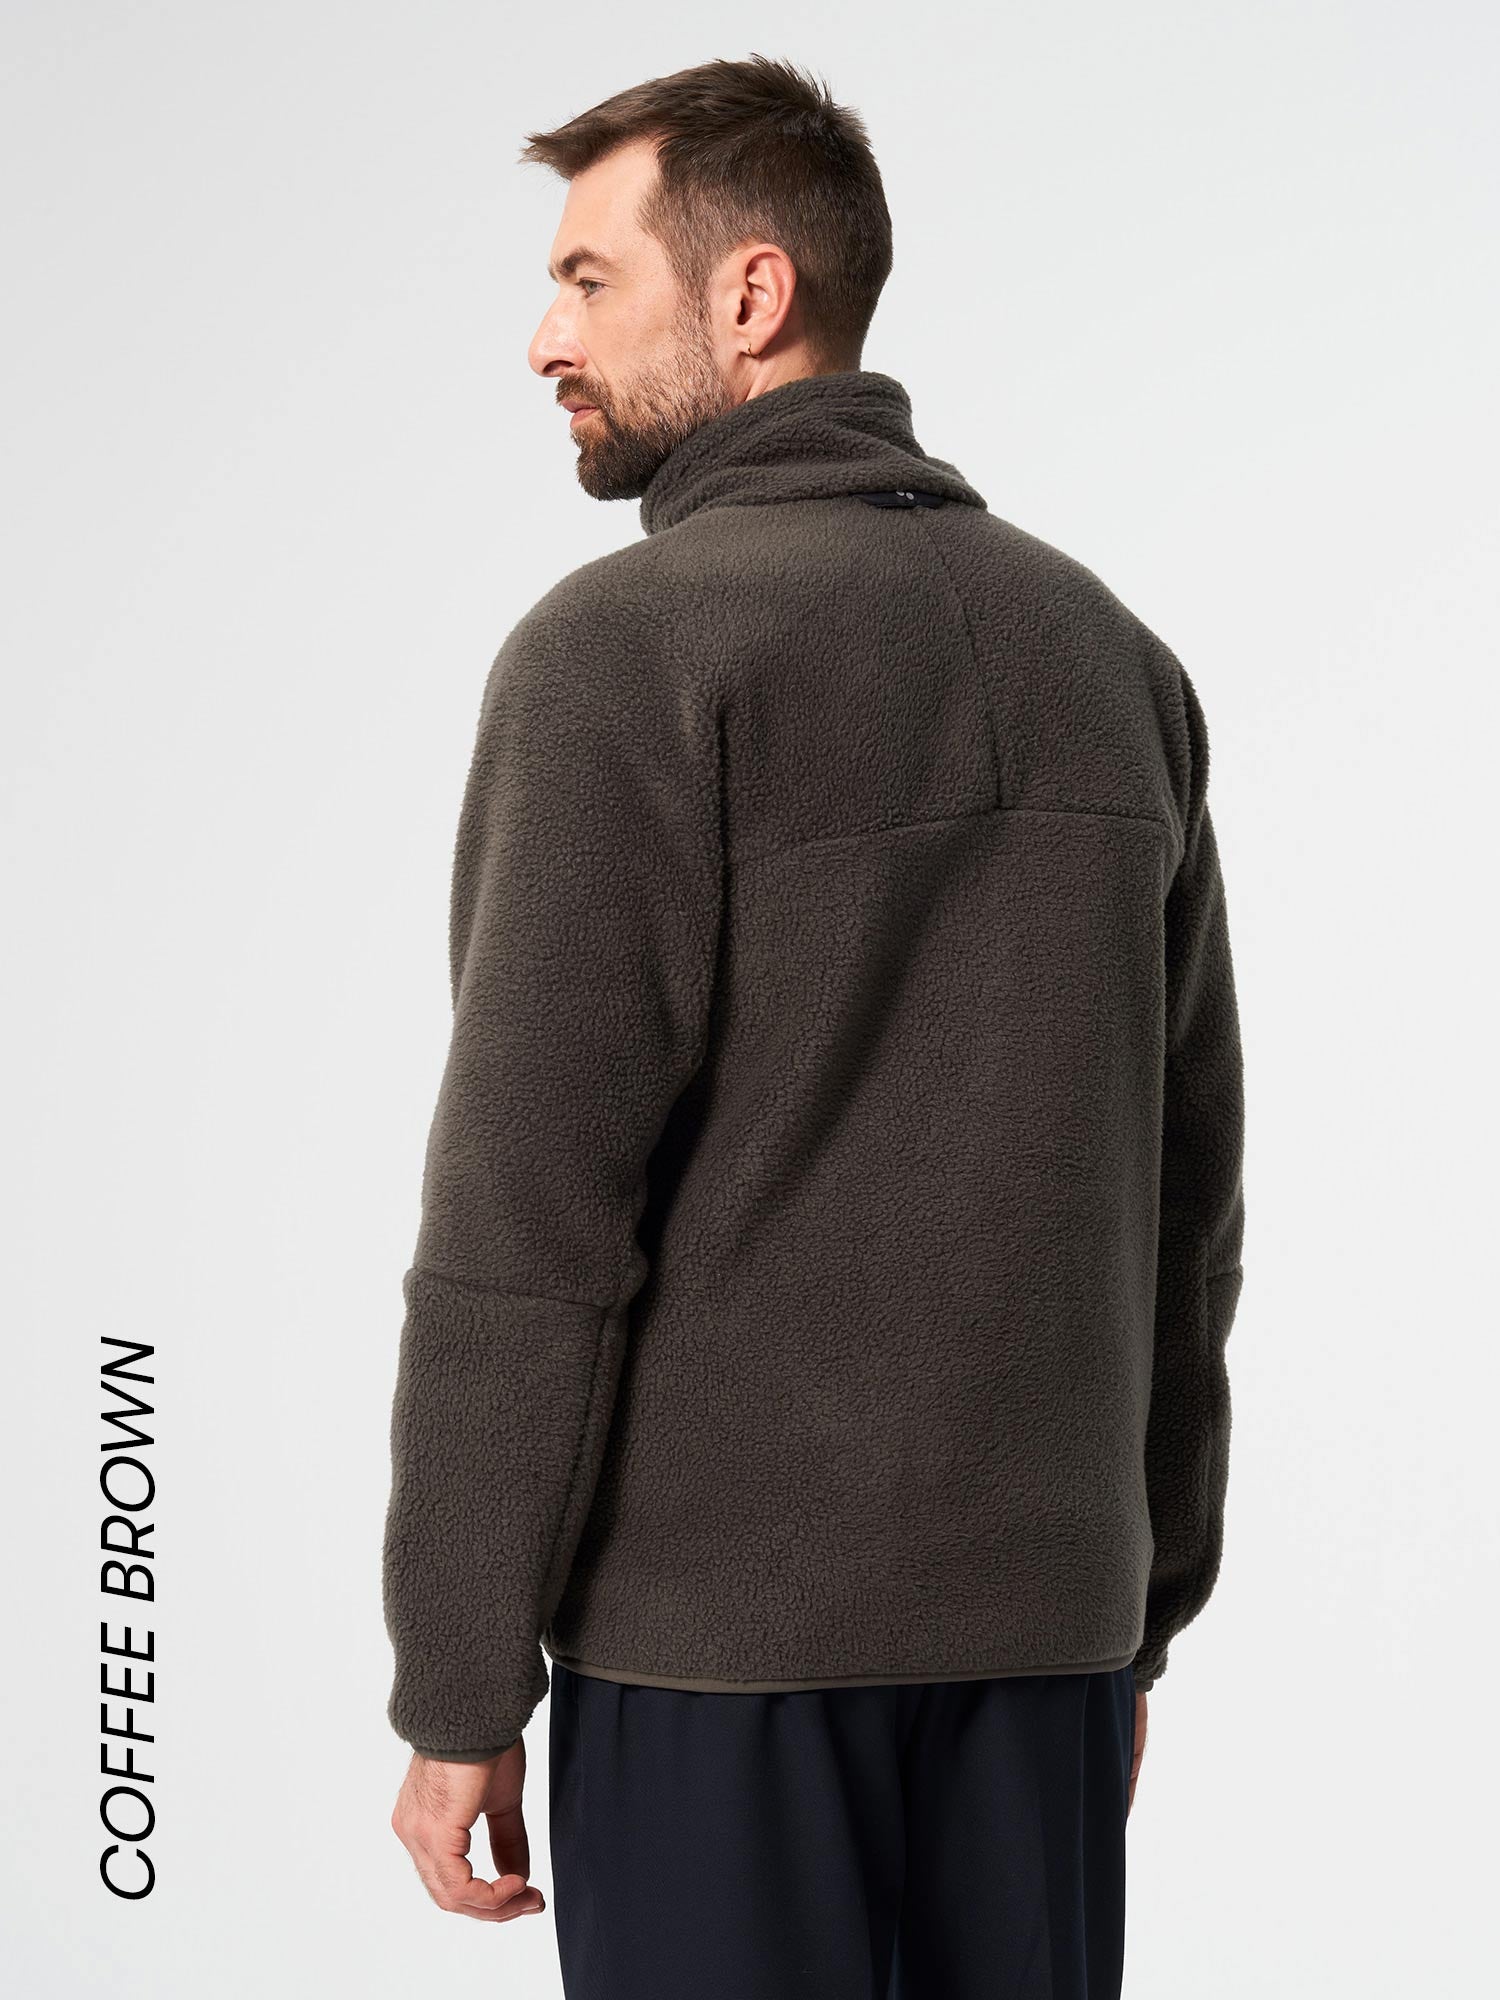 Fleece Jacket - Graphite Grey (Male)